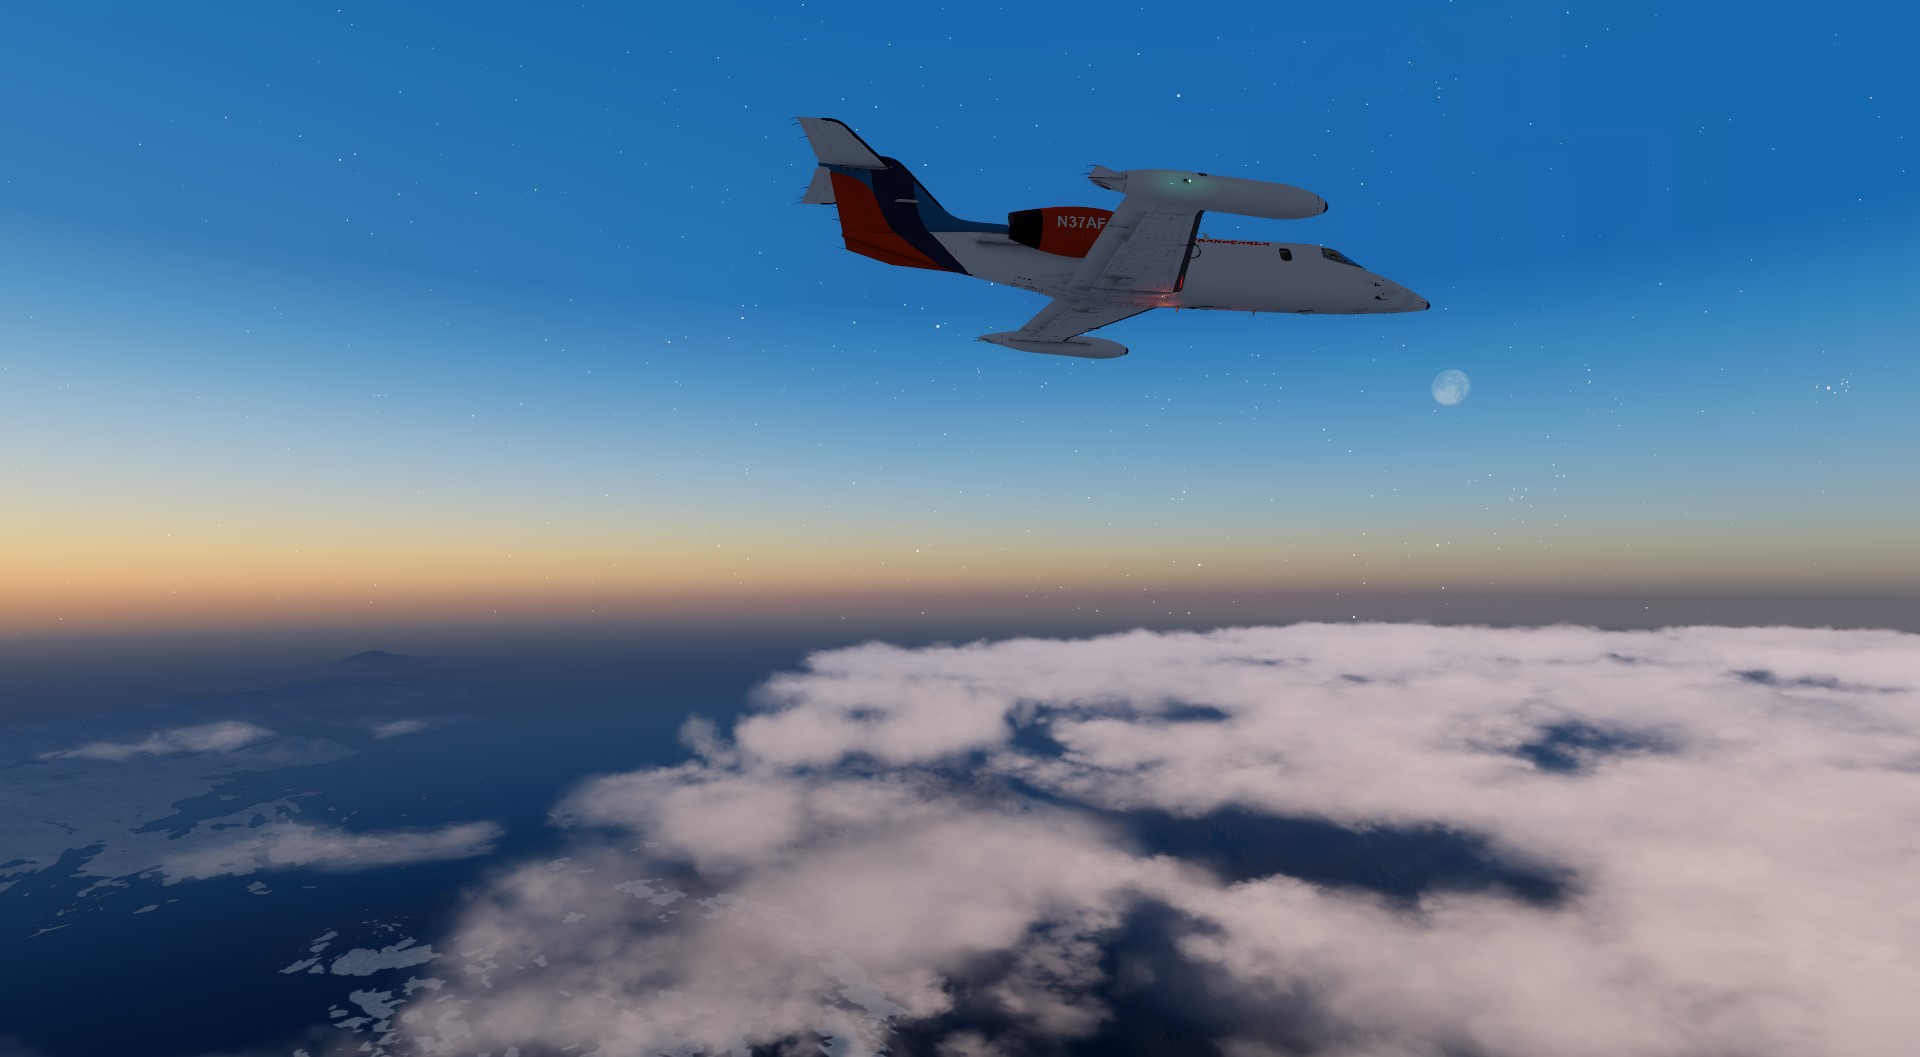 Flysimware – Learjet 35A 评测与冰岛送货之旅-7245 